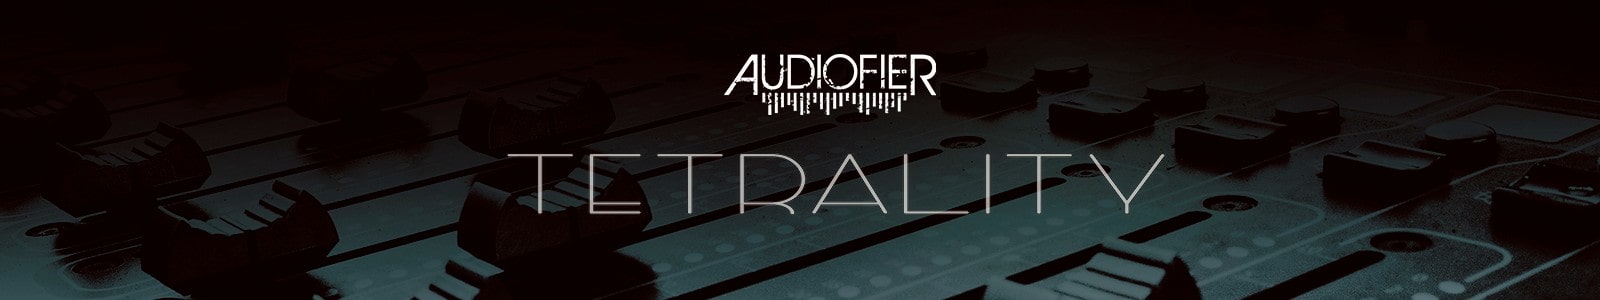 Tetrality by Audiofier